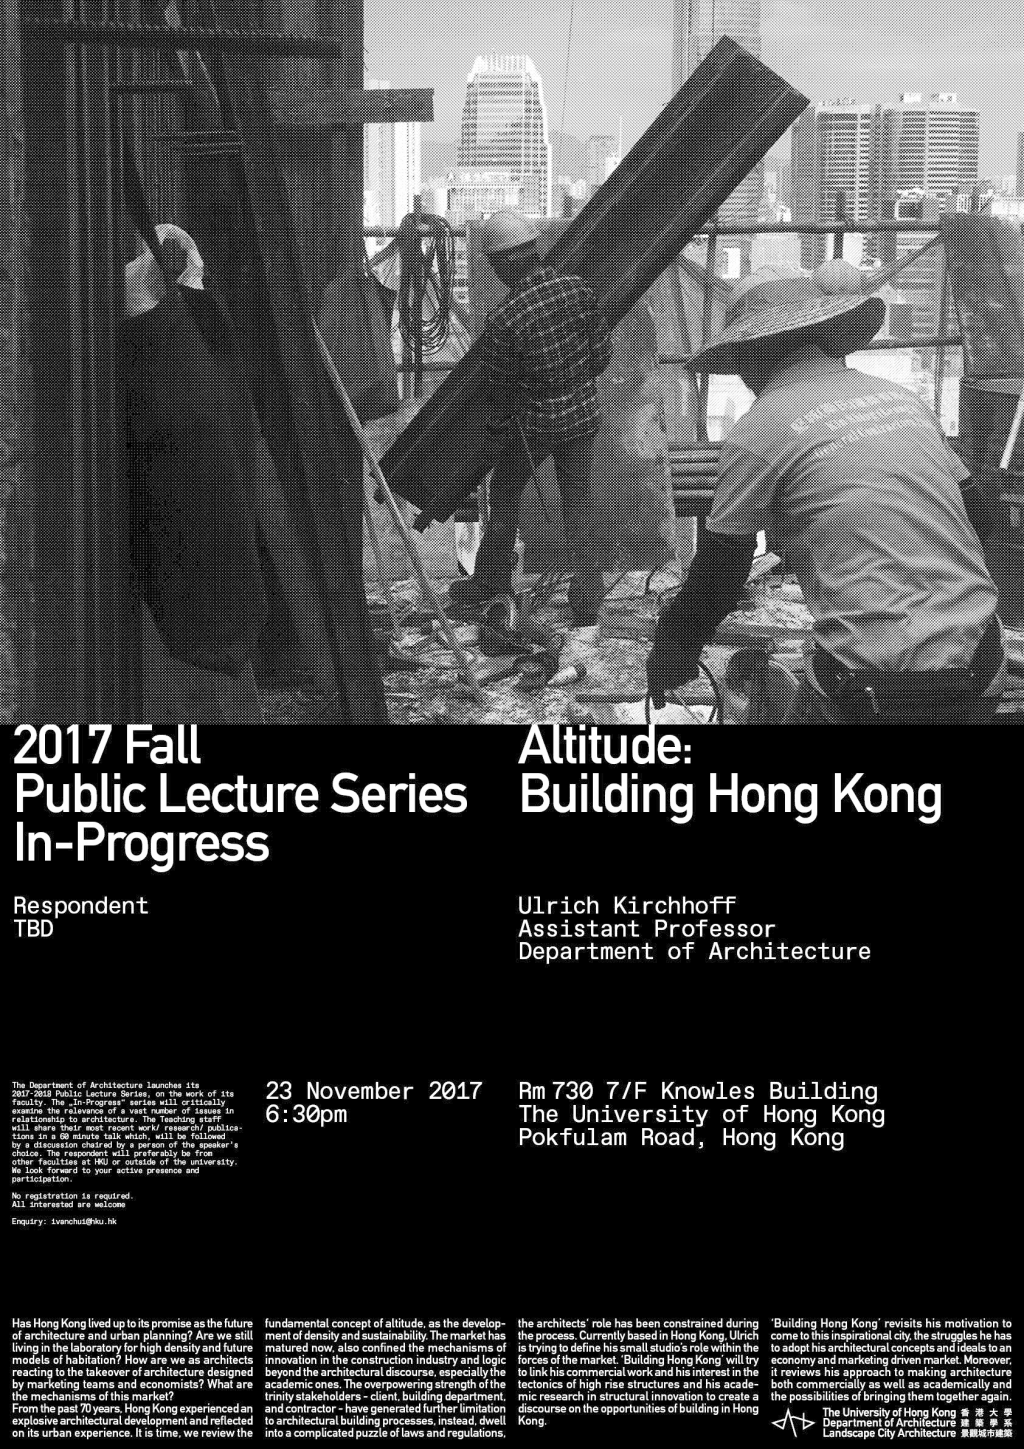 'Altitude: Building Hong Kong' by Ulrich Kirchhoff